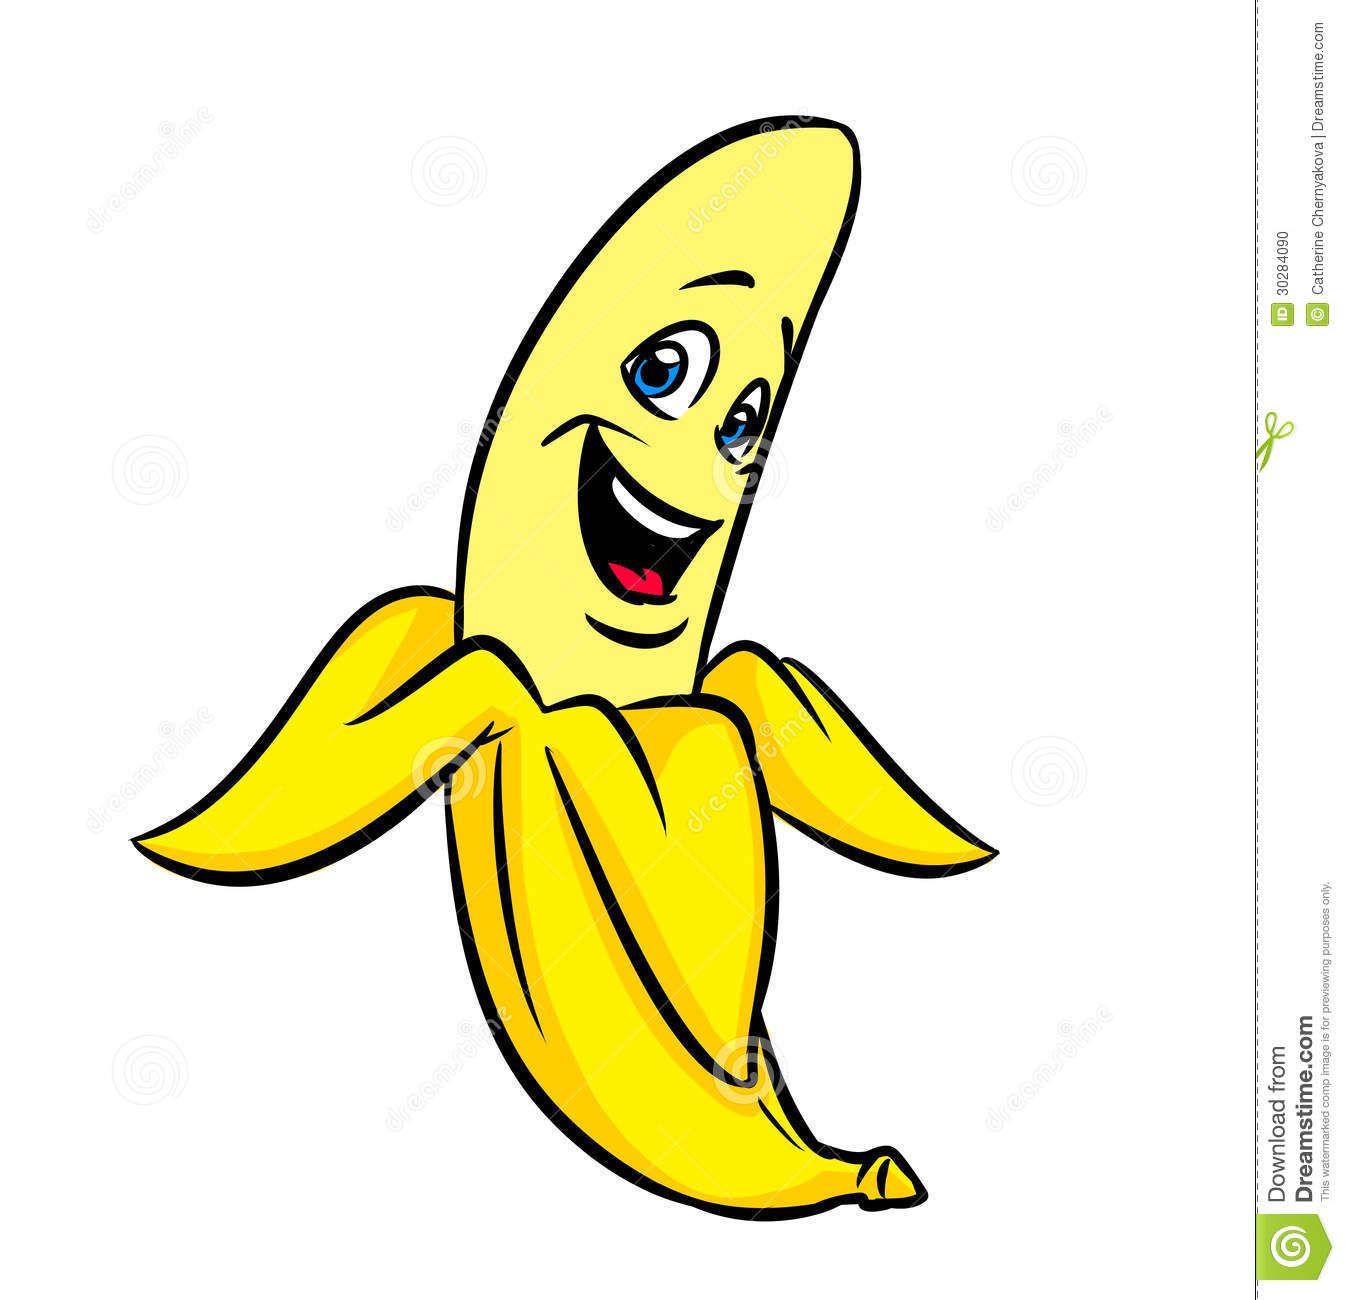 Bananas clipart banana face, Bananas banana face Transparent